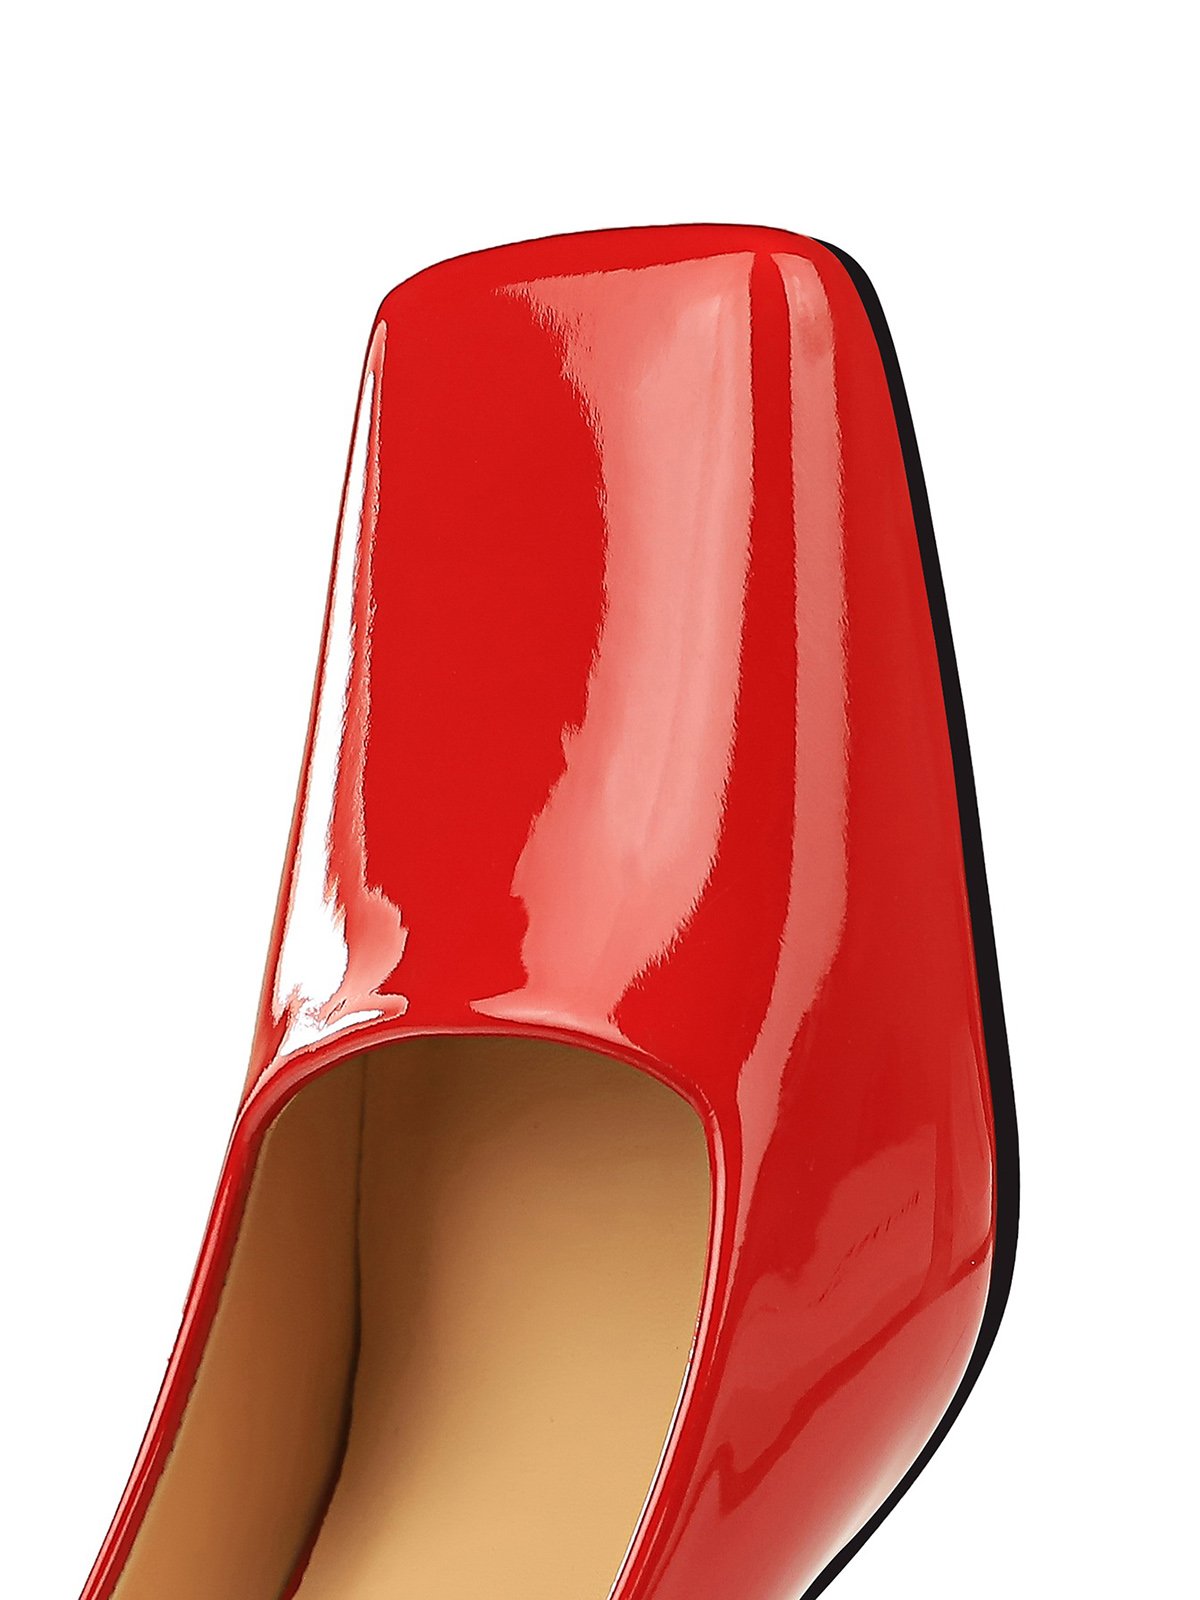 Women Minimalist Patent Leather Stiletto Heel Square Toe Pumps